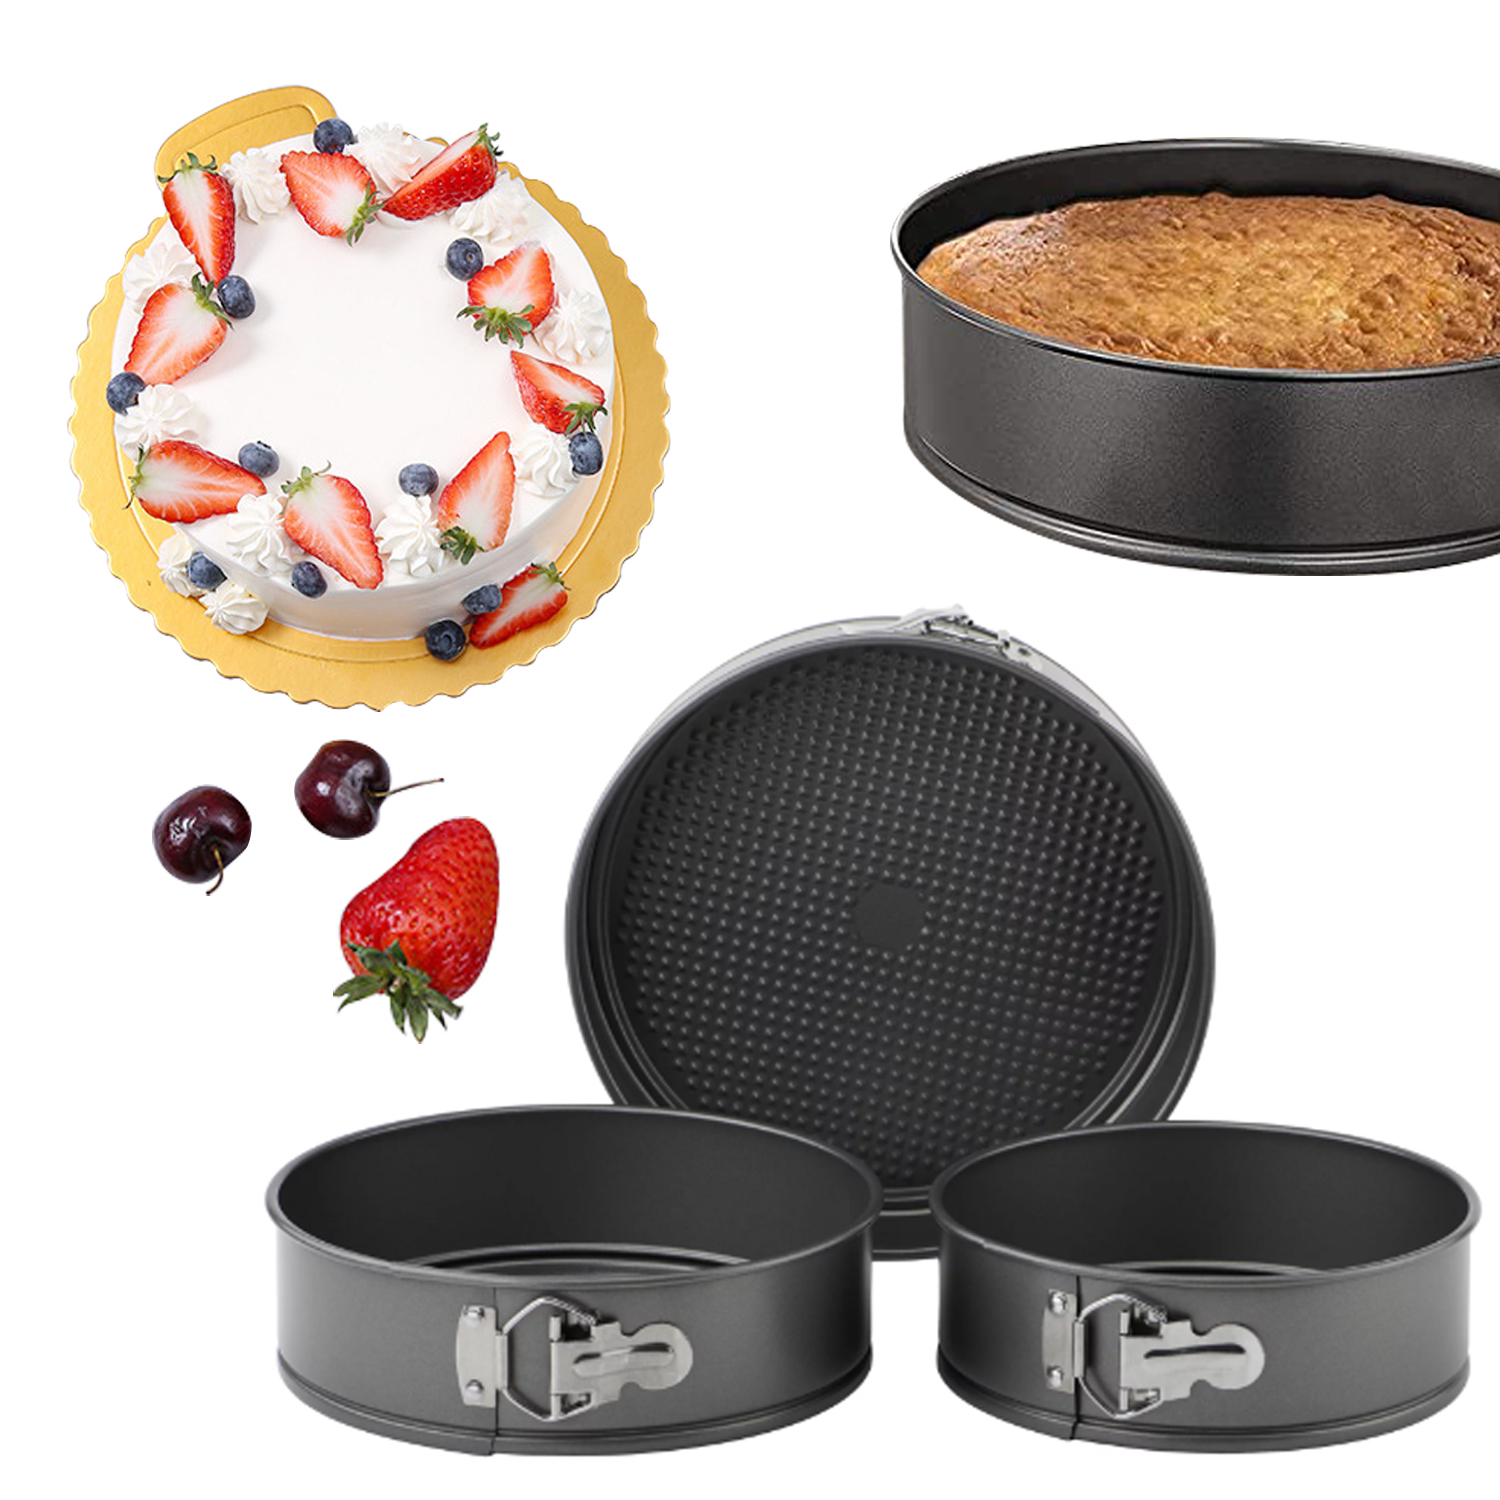 Springform Pan Set of 3 Nonstick Cheesecake Pan, 9 10 11 Inch Leakproof Round Cake Mold, Bakeware Round Nonstick Baking Pans